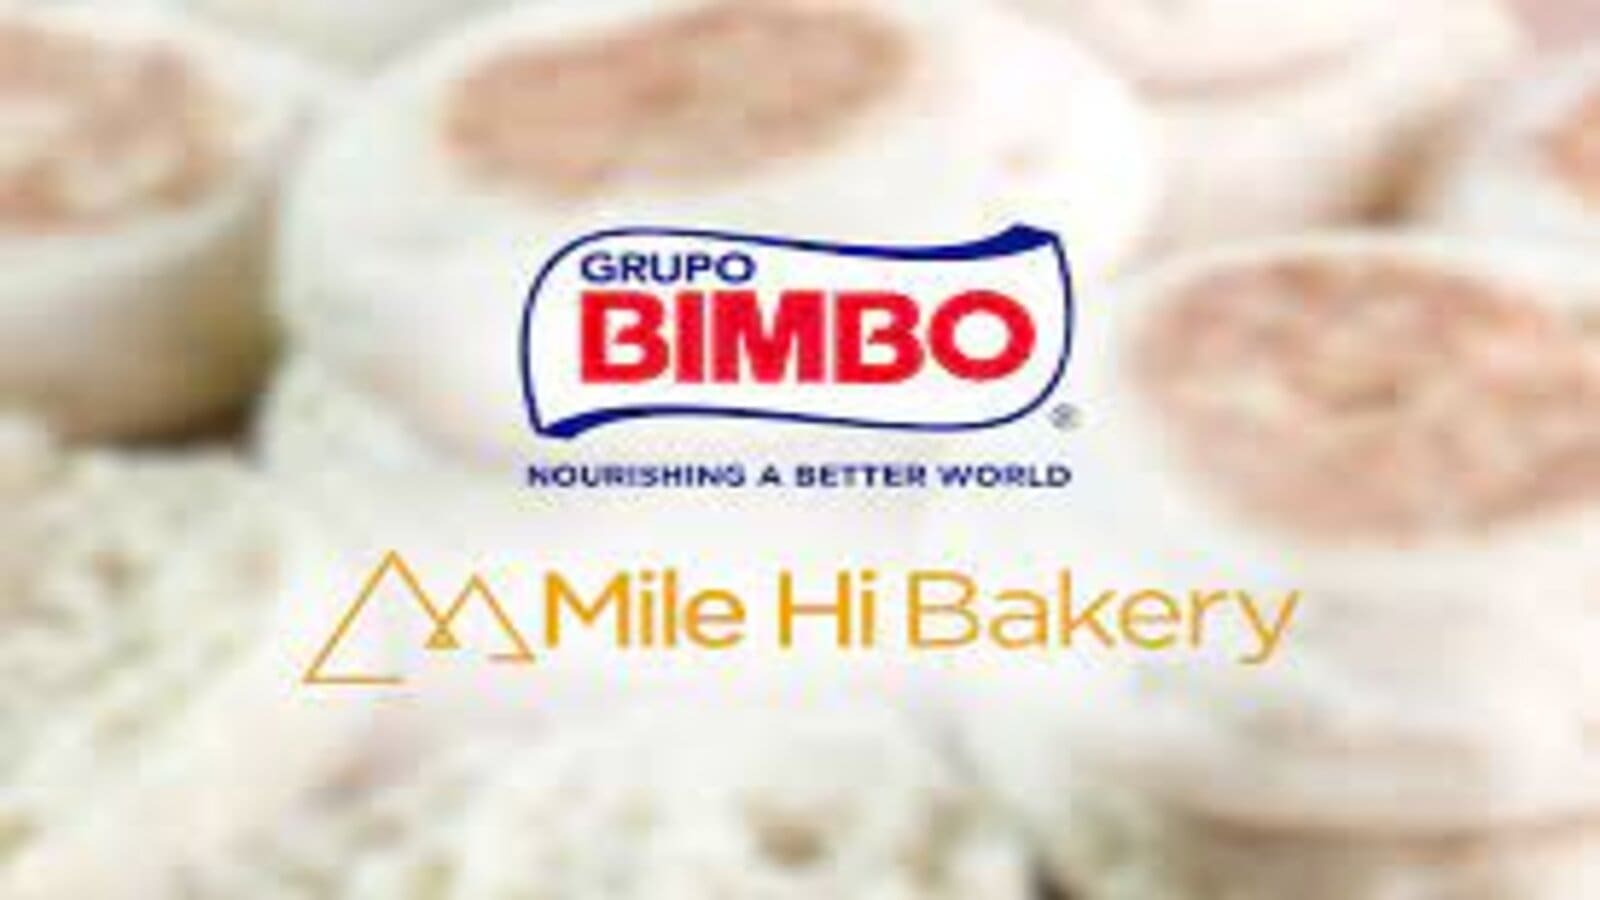 Bimbo snaps up English muffin maker Mile Hi Bakery